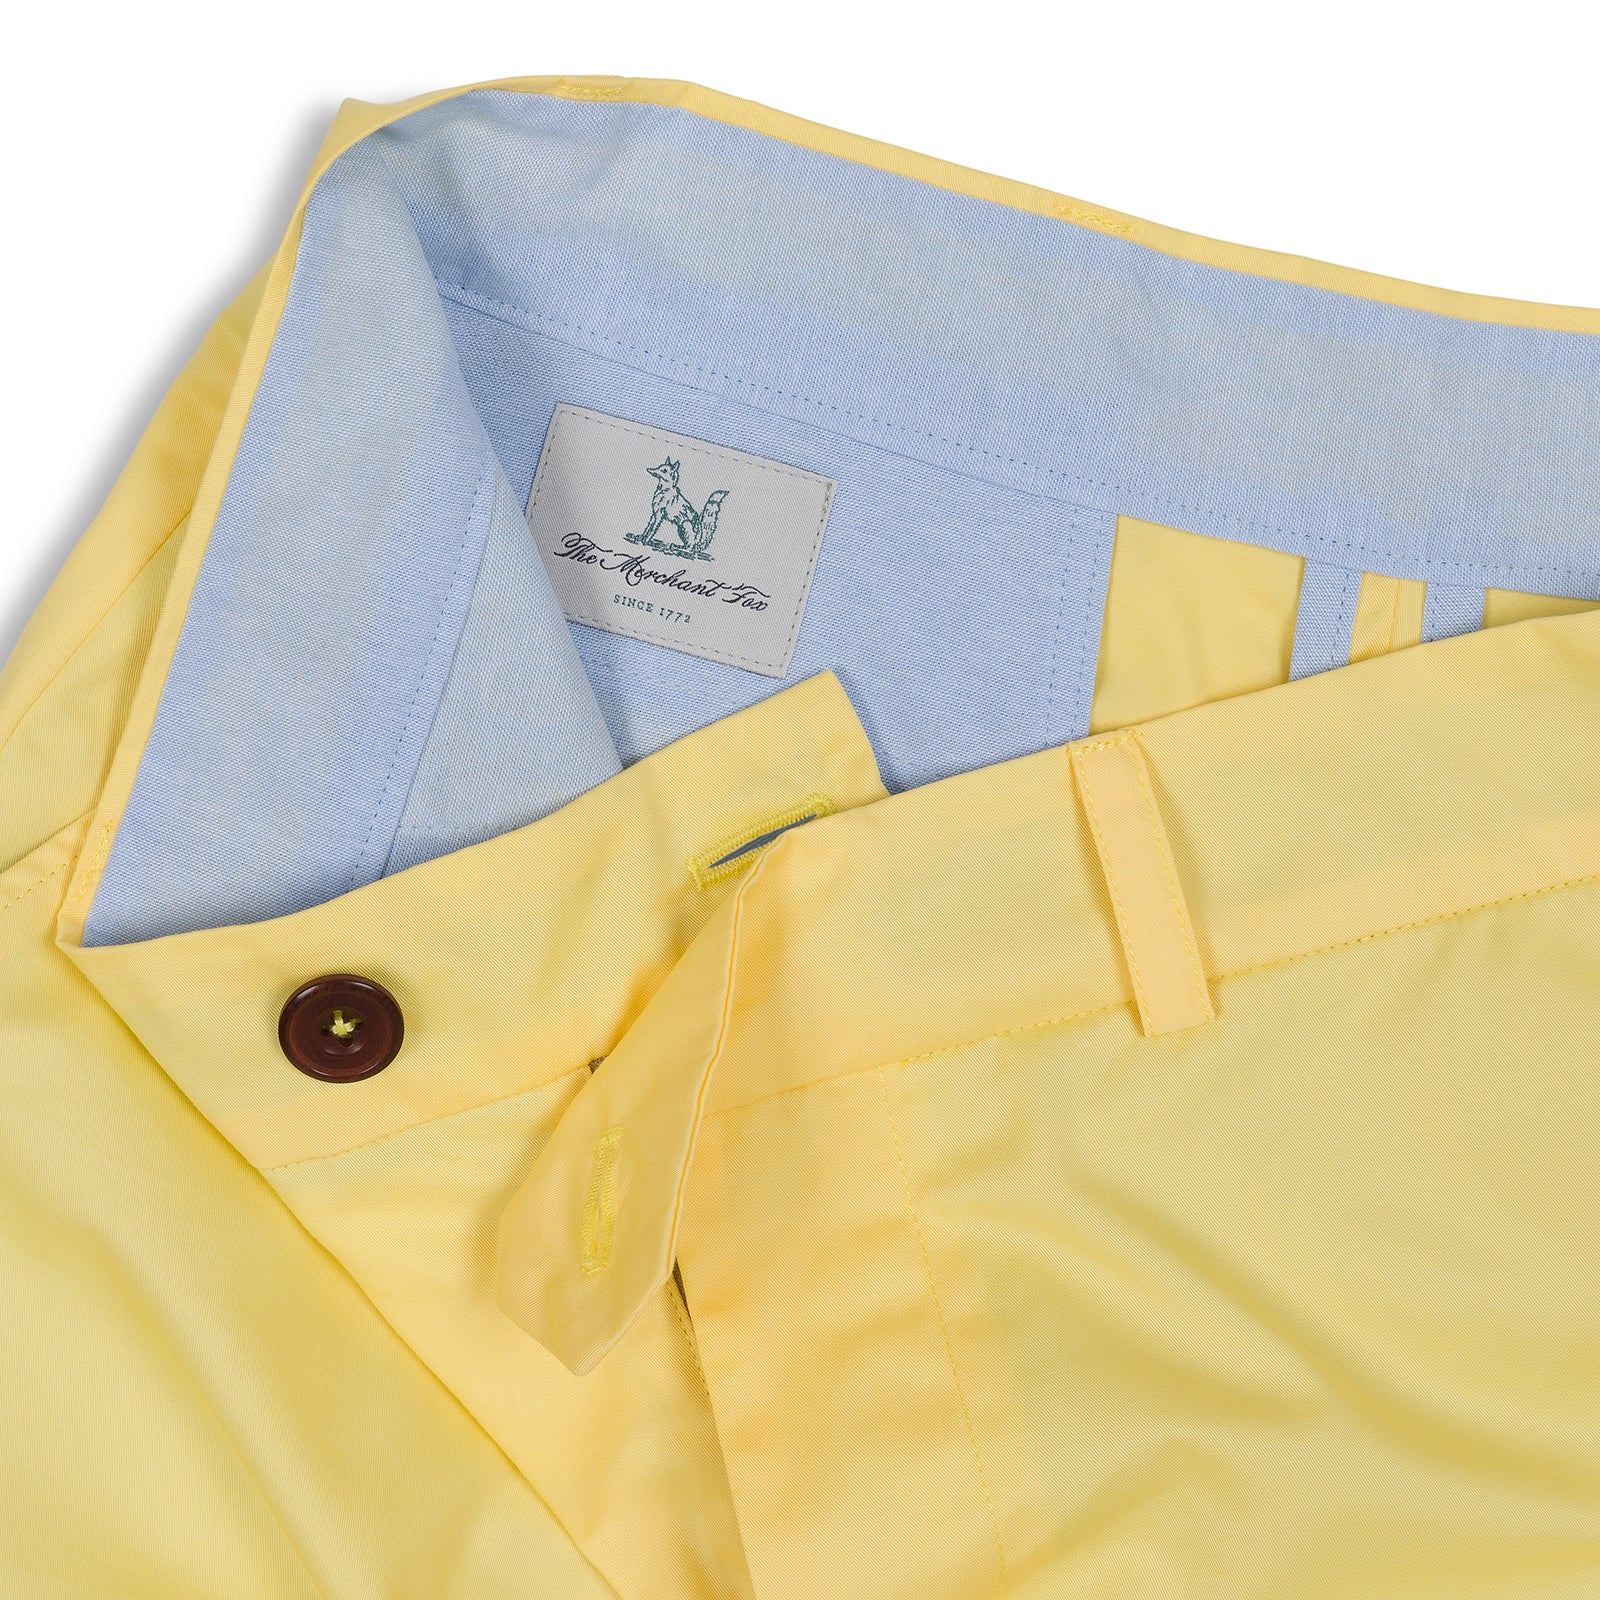 The Merchant Fox Cotton Shorts in Yellow